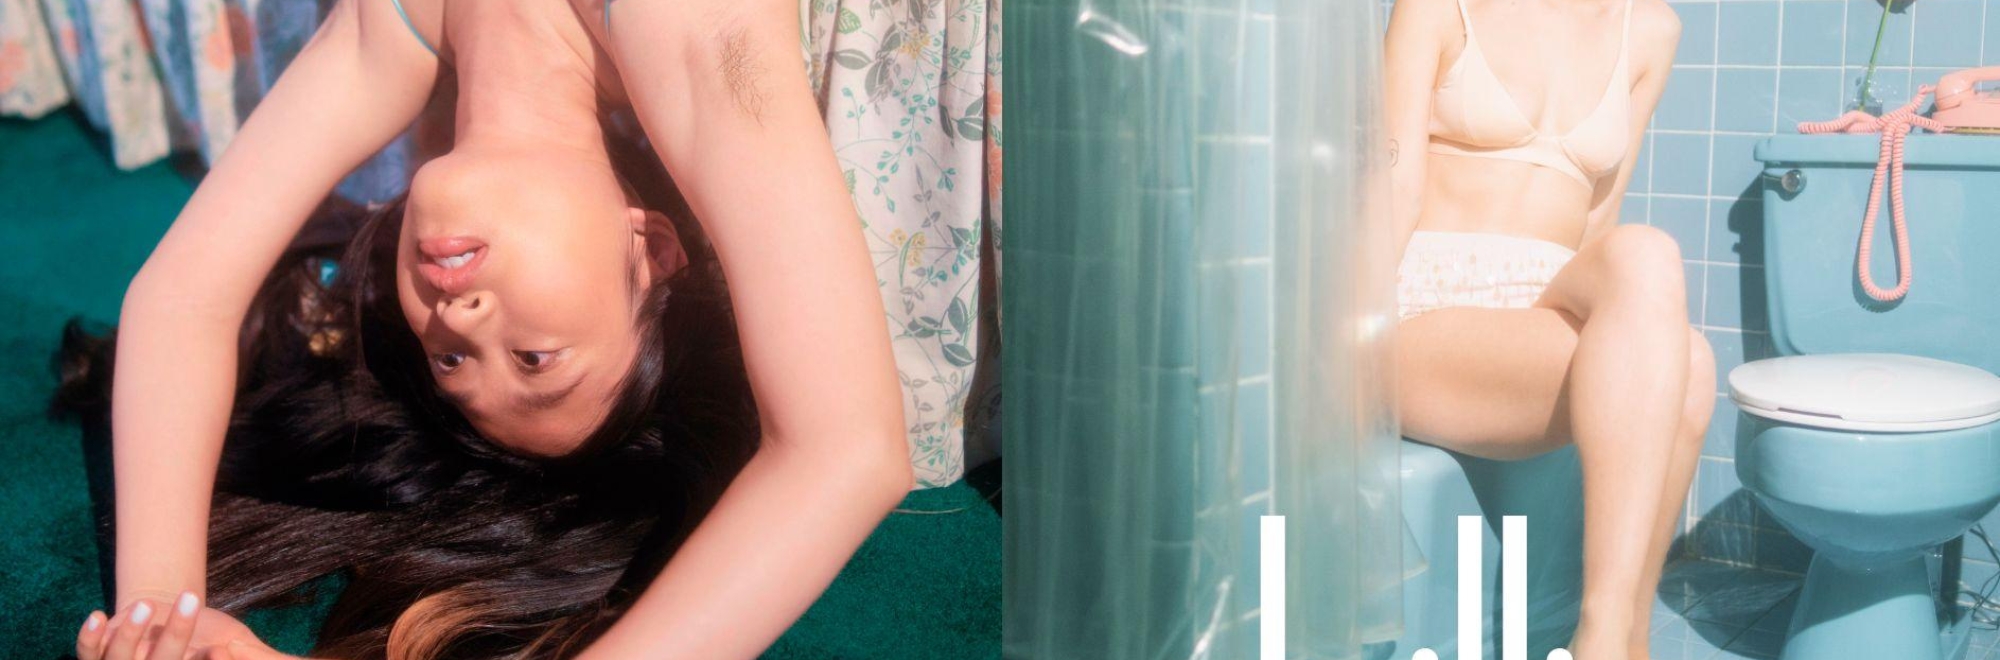 How Billie's #ProjectBodyHair campaign celebrates female body hair